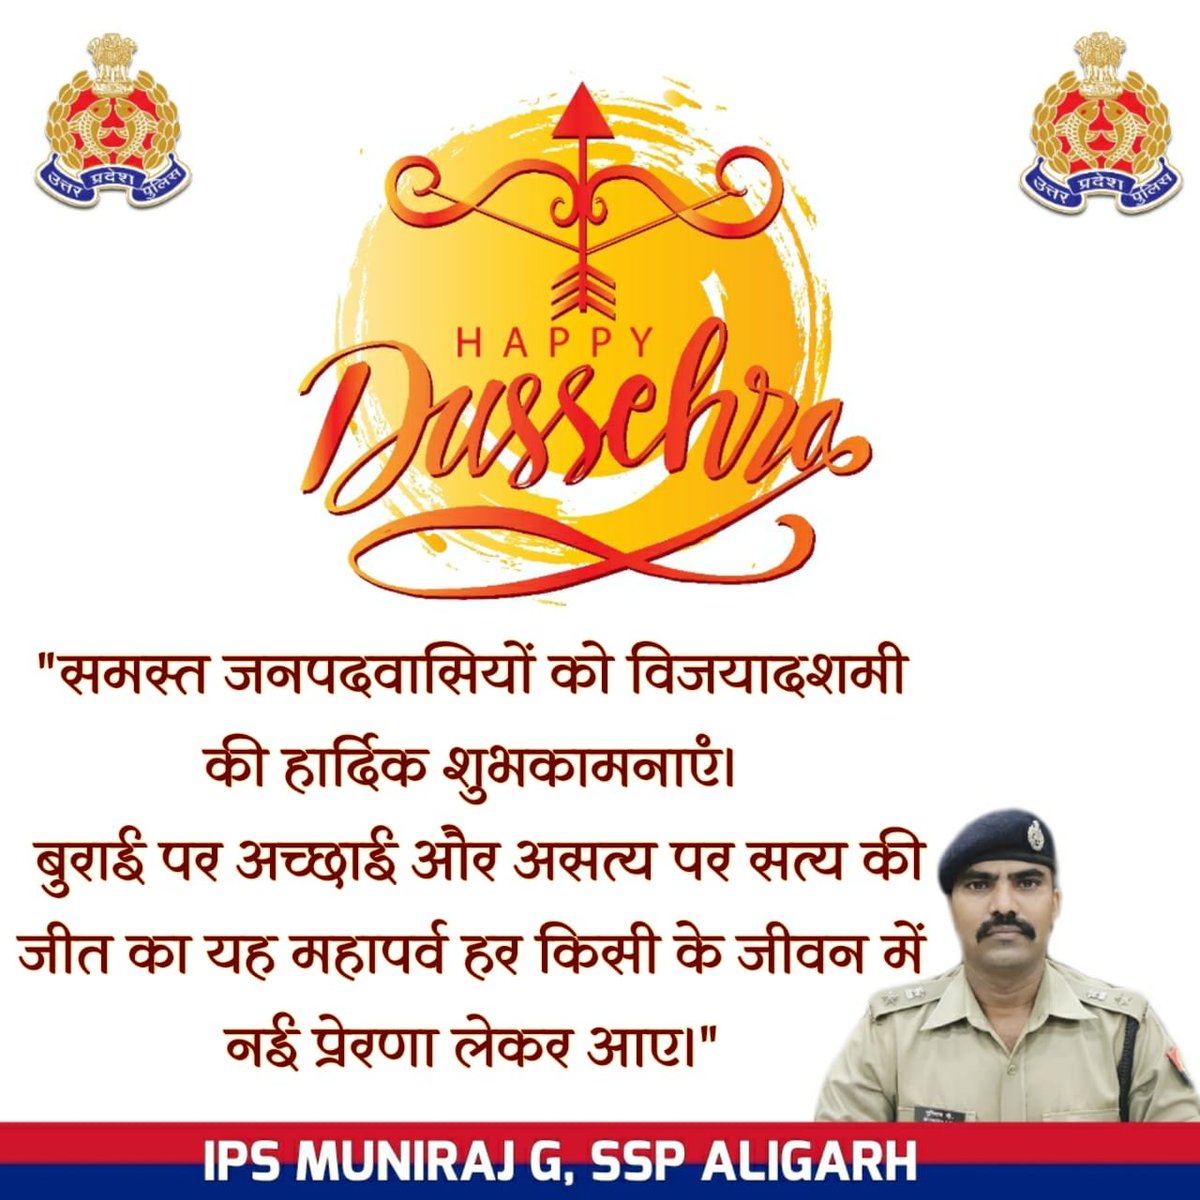 #UPPInNews 
#Community_Policing
#happydussehra2020 
#Vijayadashami2020